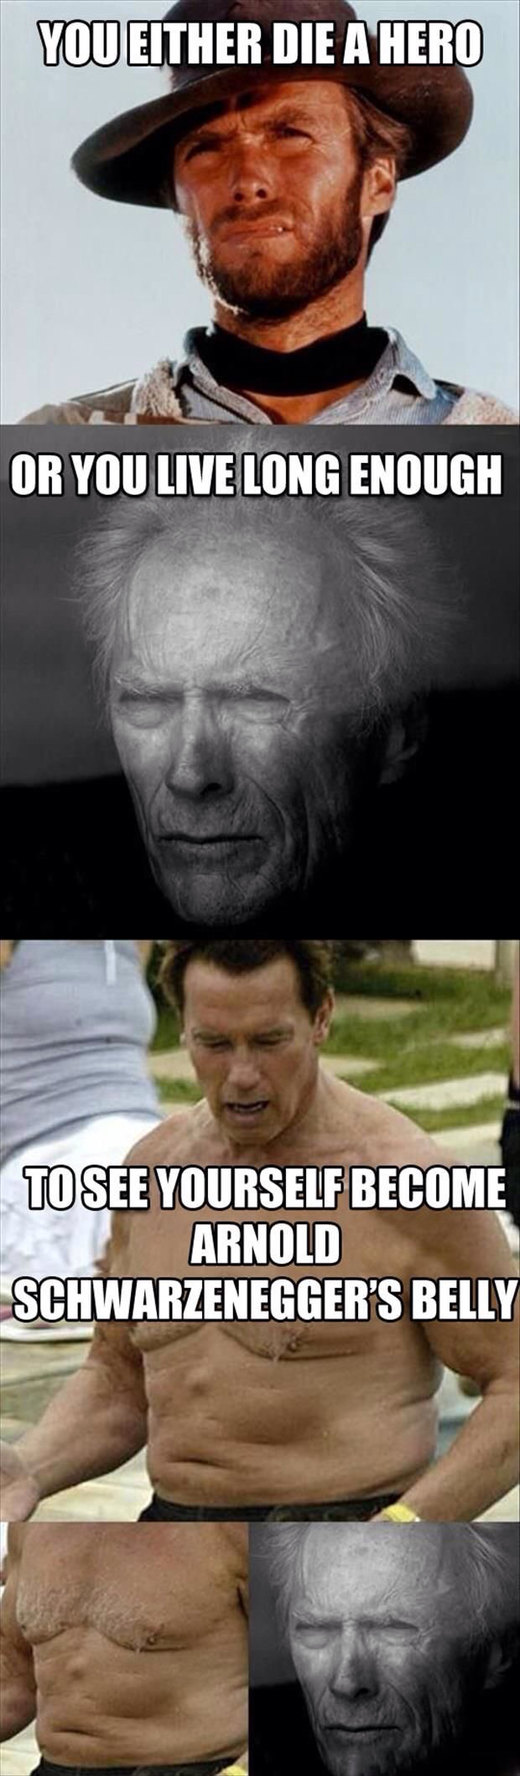 Arnie's belly - meme